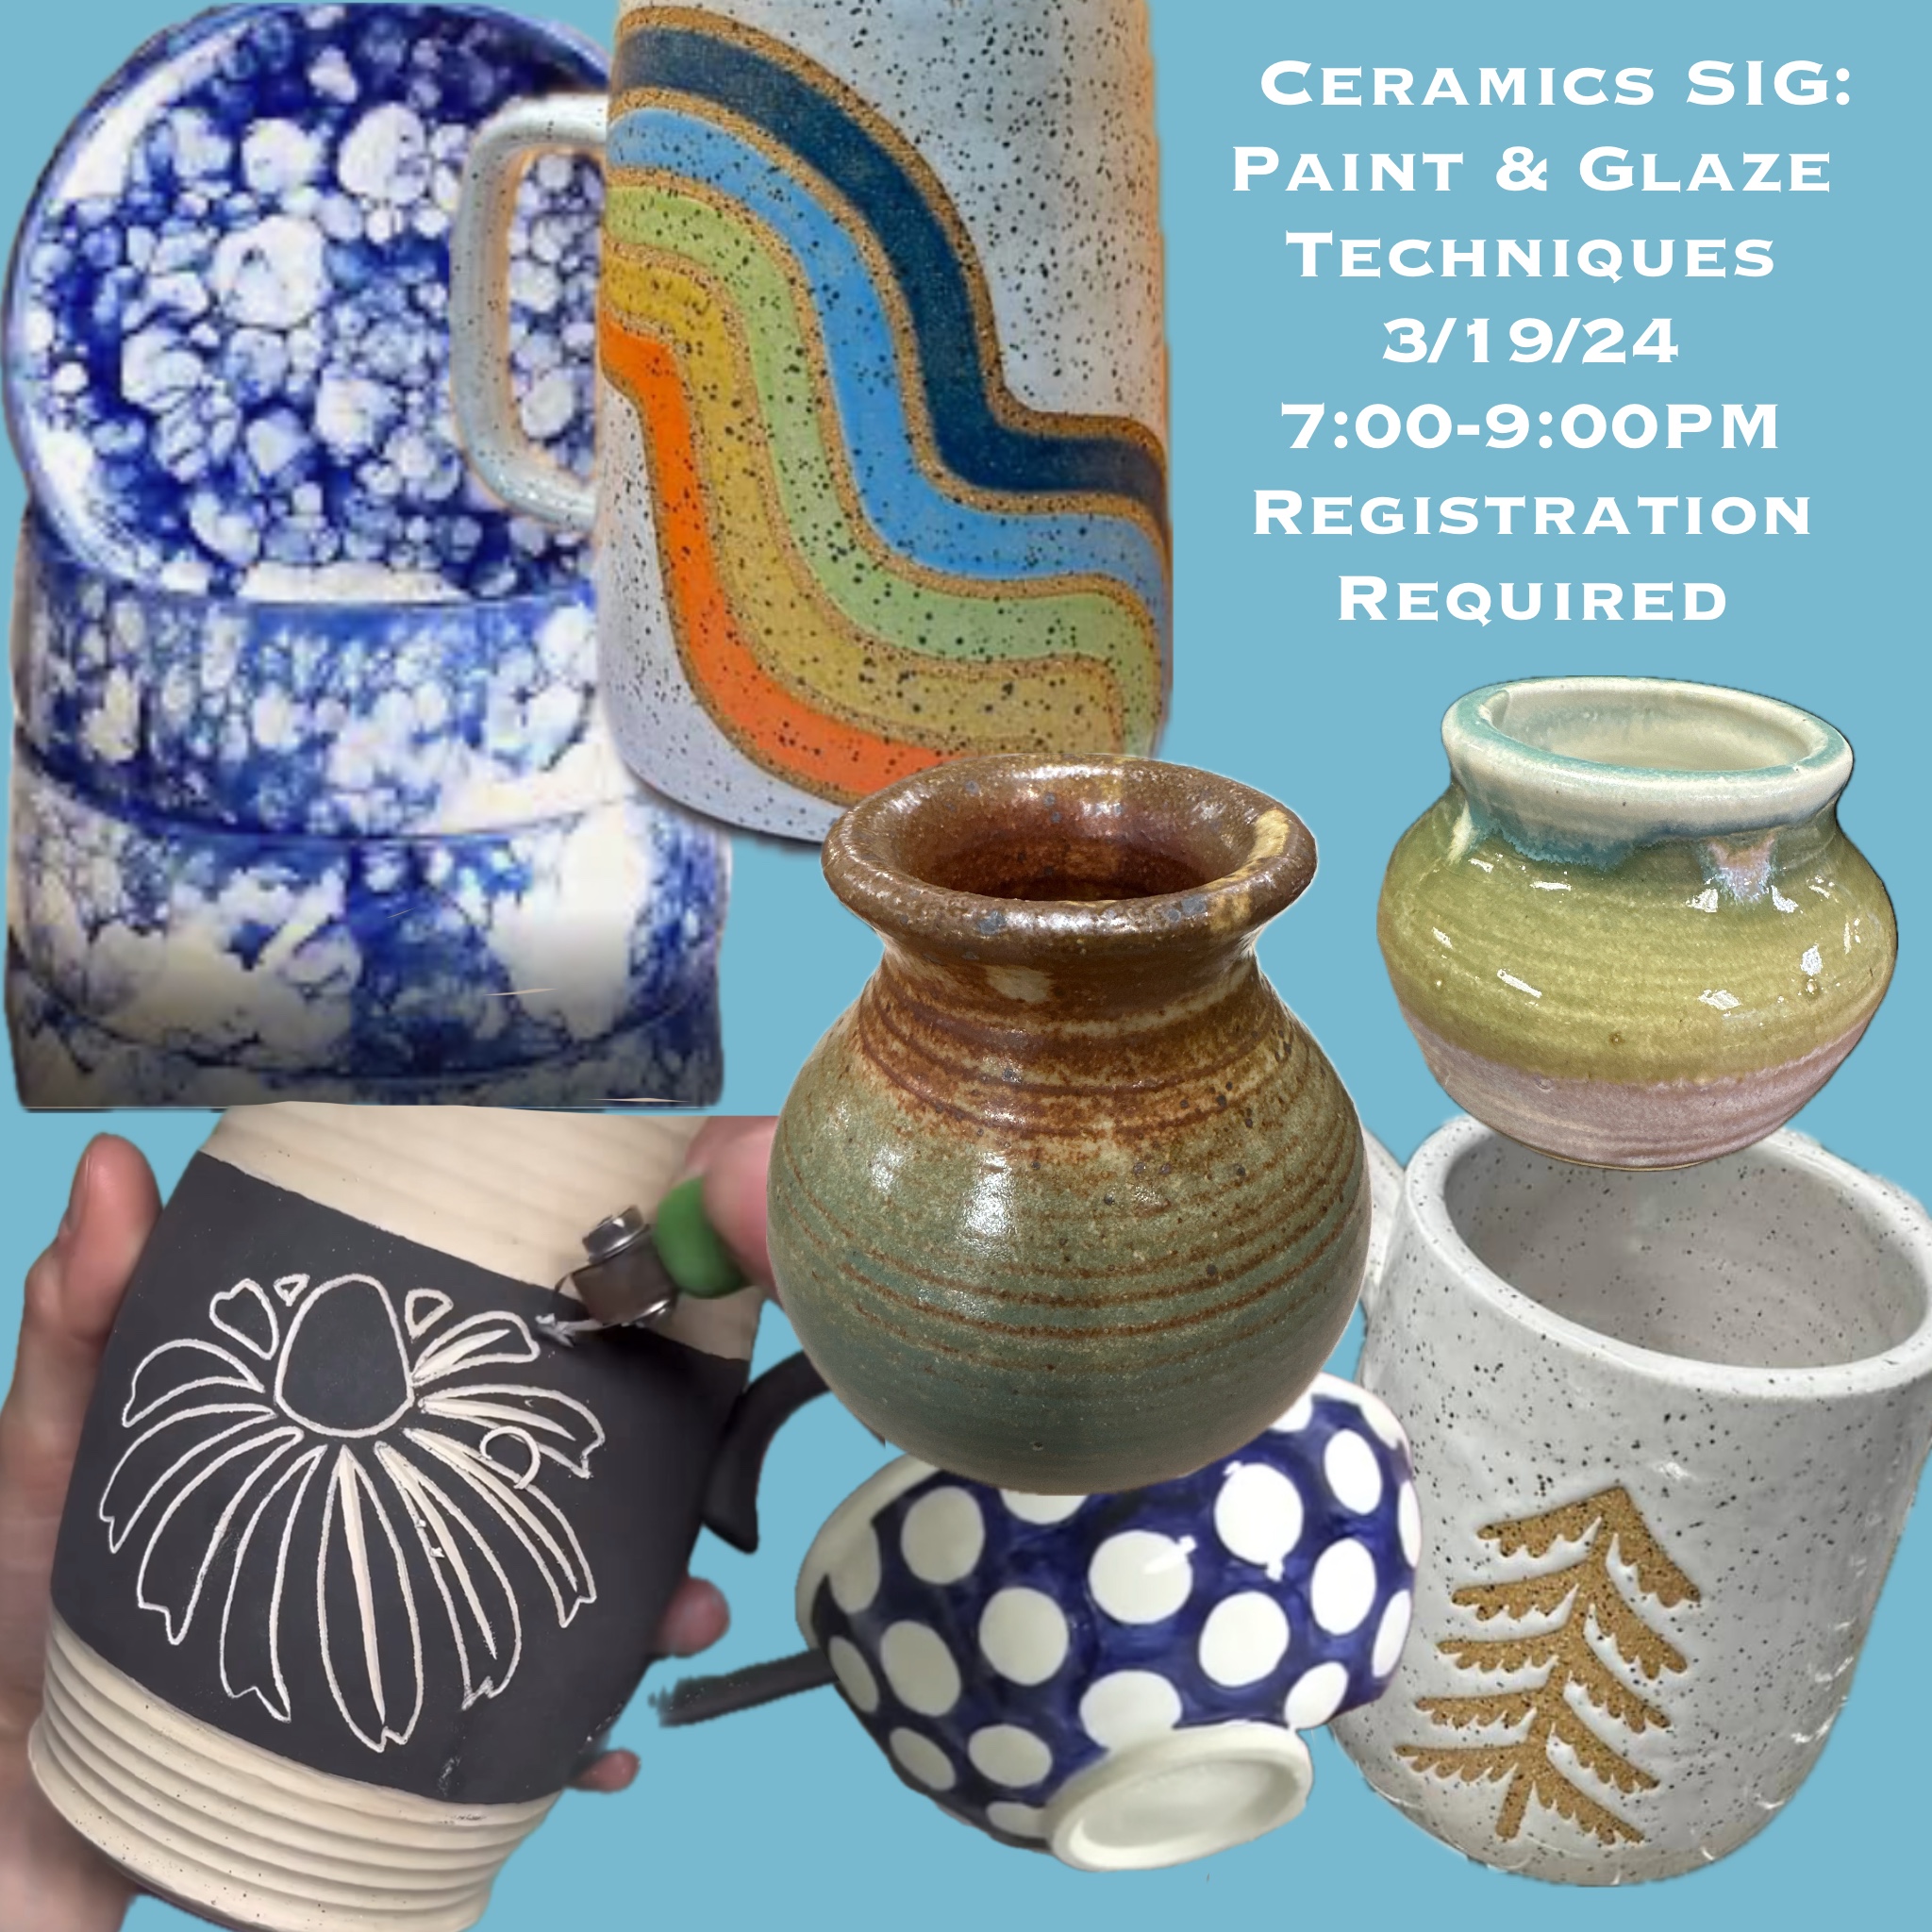 Ceramics SIG: Paint & Glaze Techniques